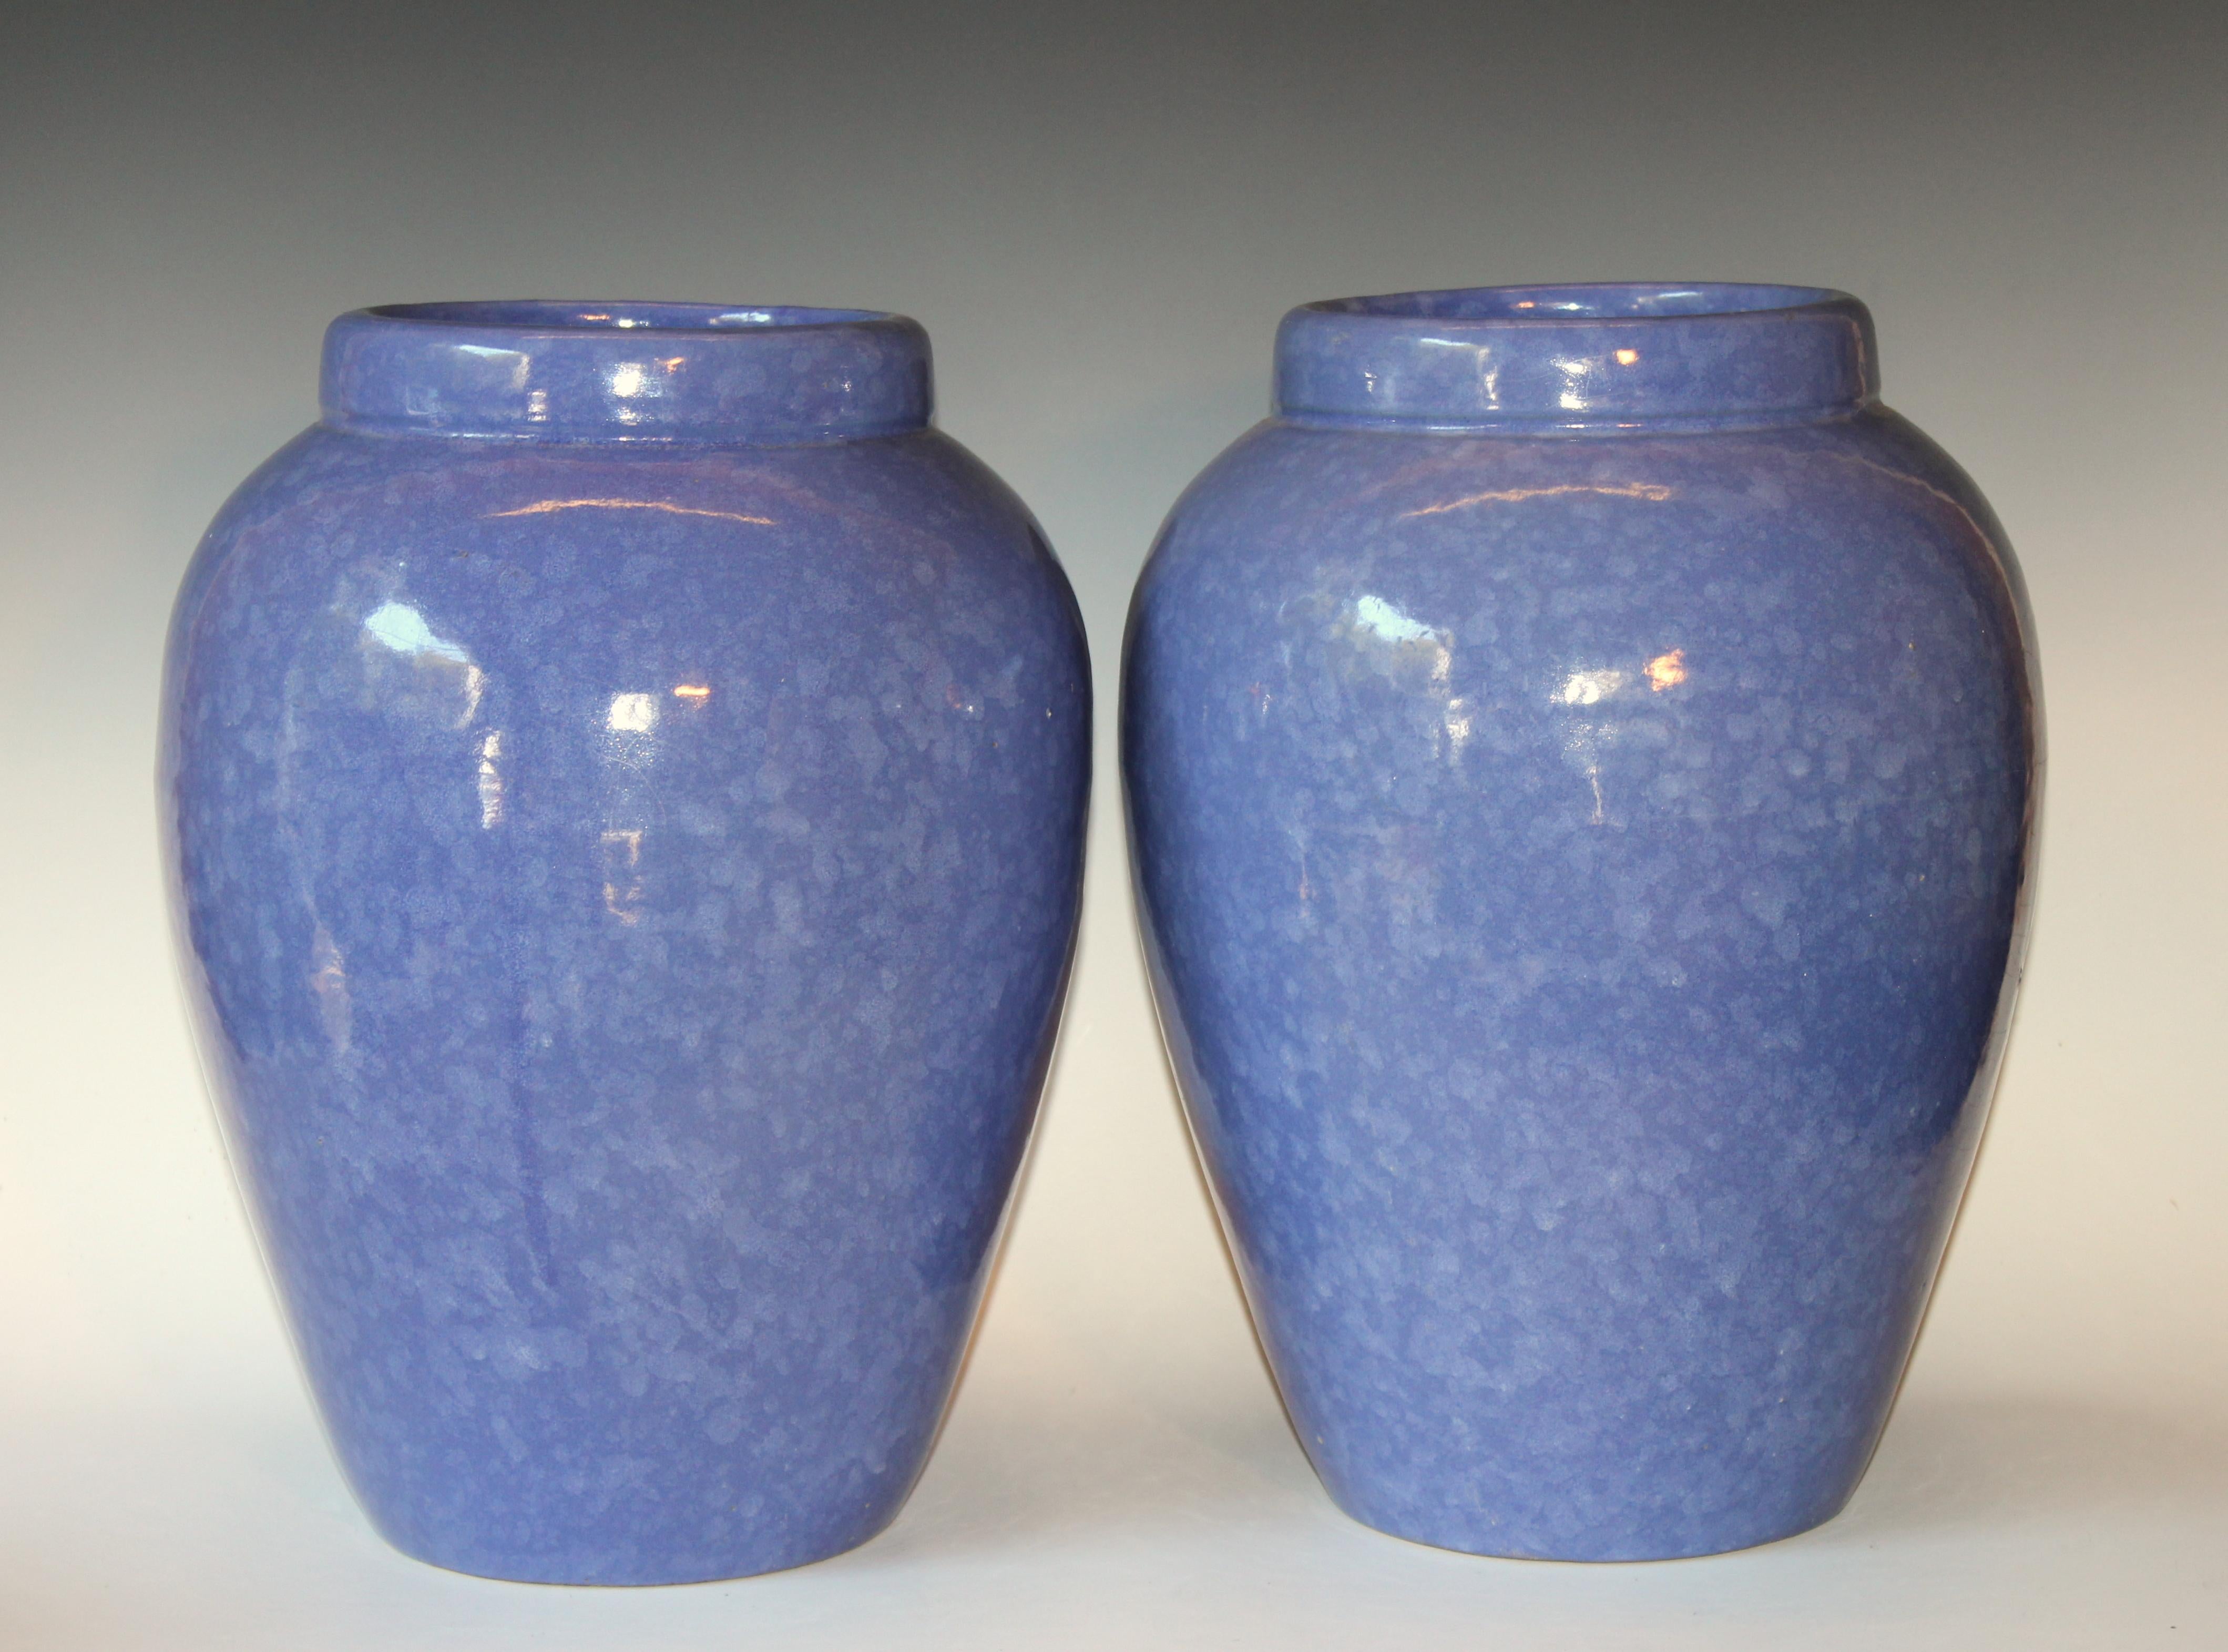 American RRP CO Oil Jars McCoy Vases Mottled Blue Large Vintage Floor Pottery Urns, Pair